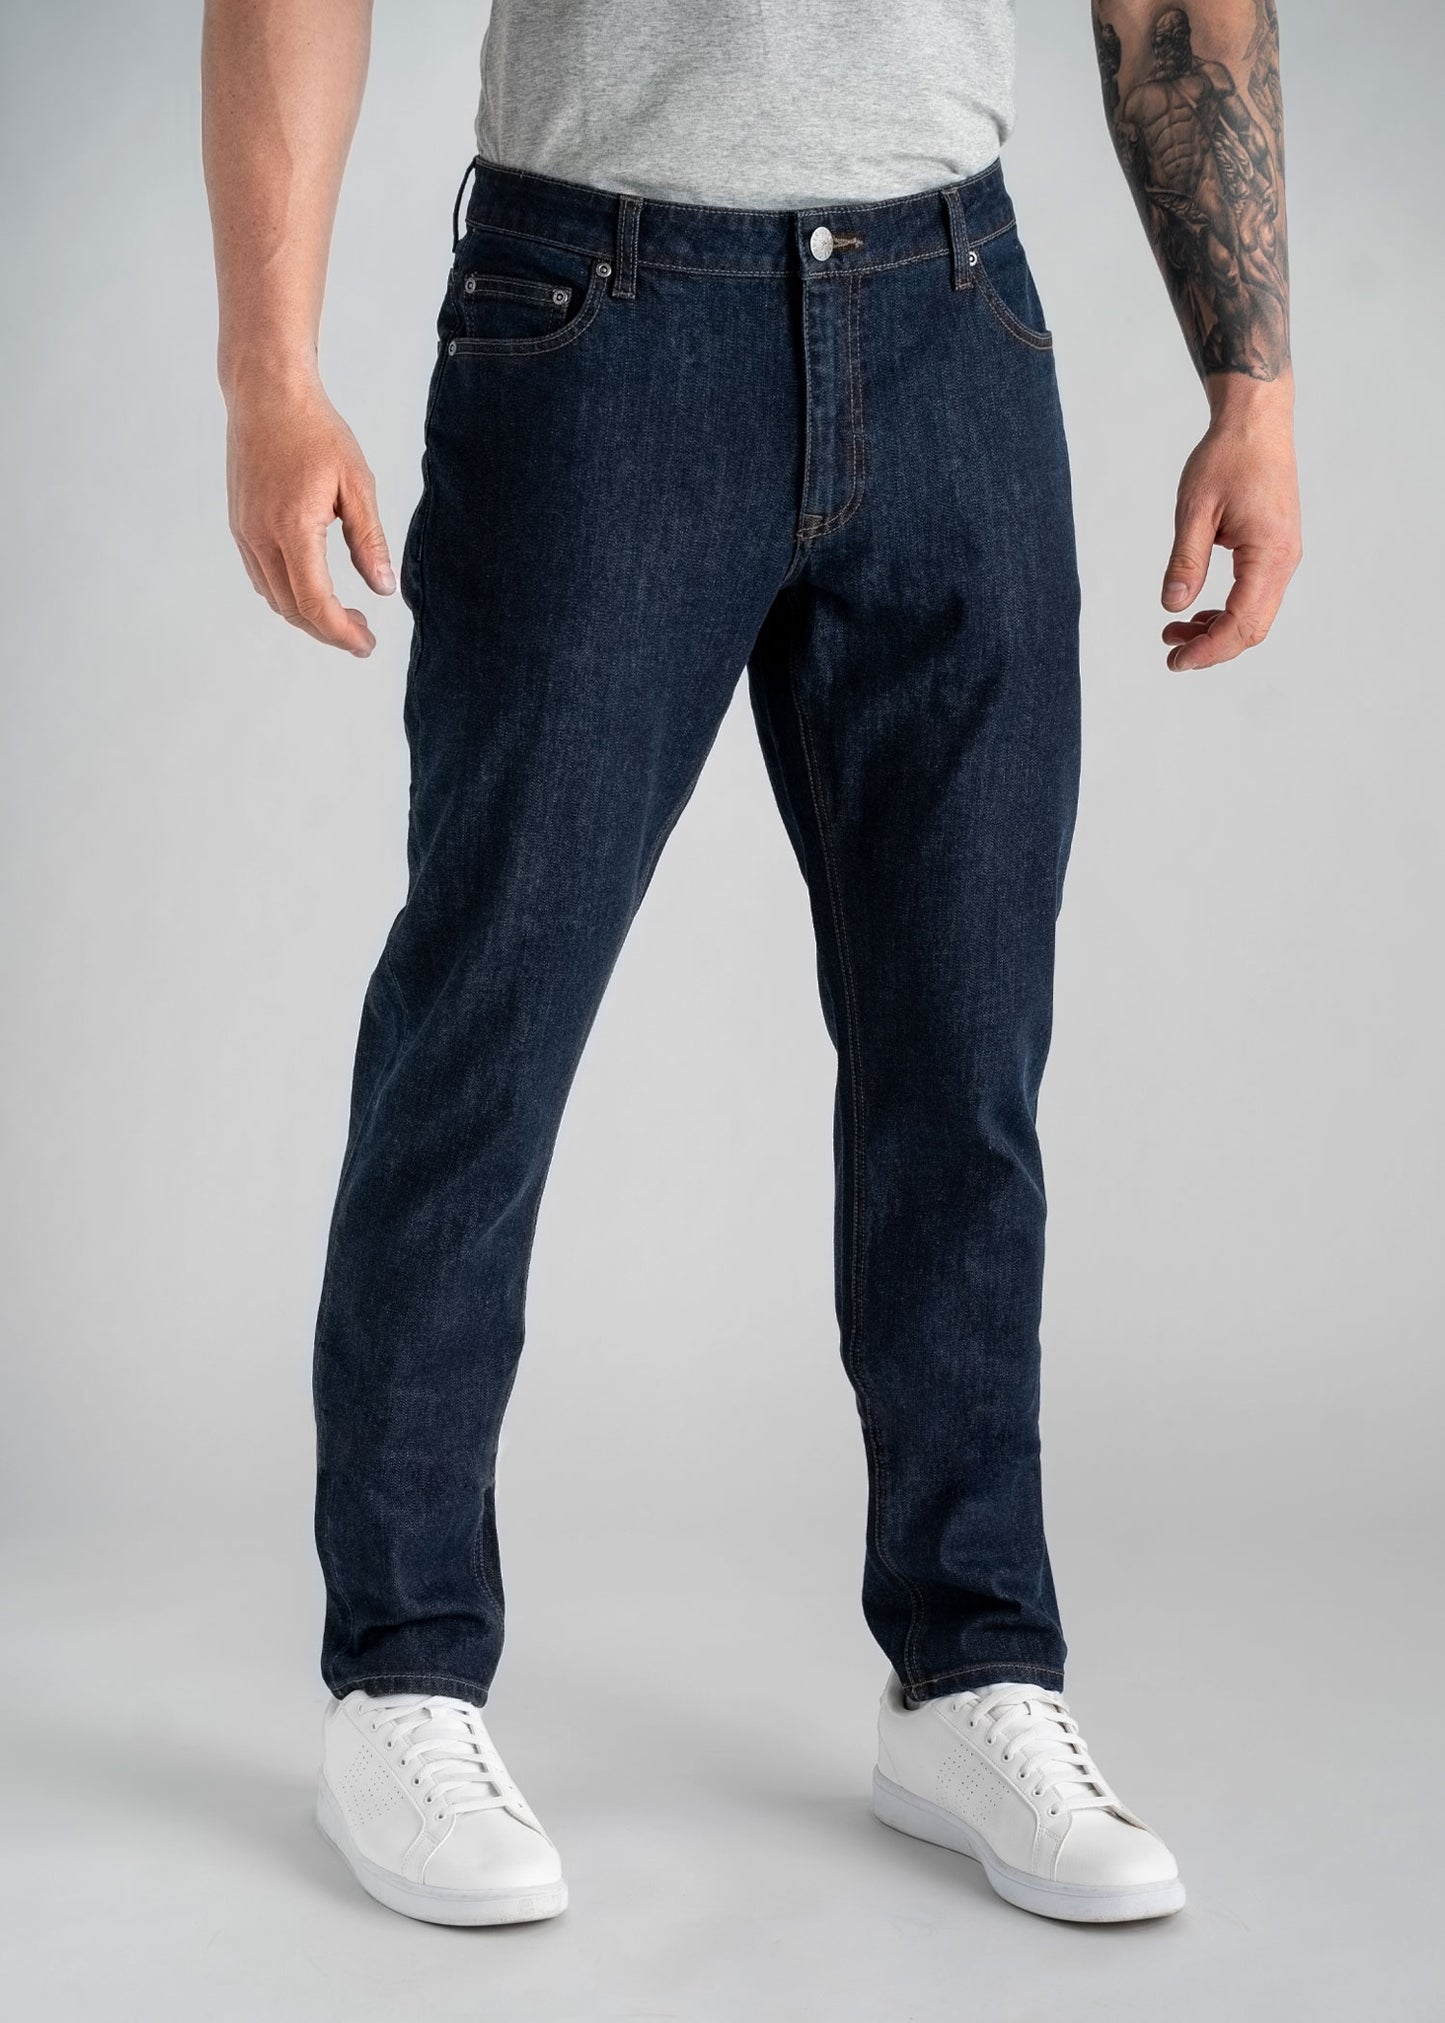 american-tall-mens-carman-jeans-heritageindigo-front